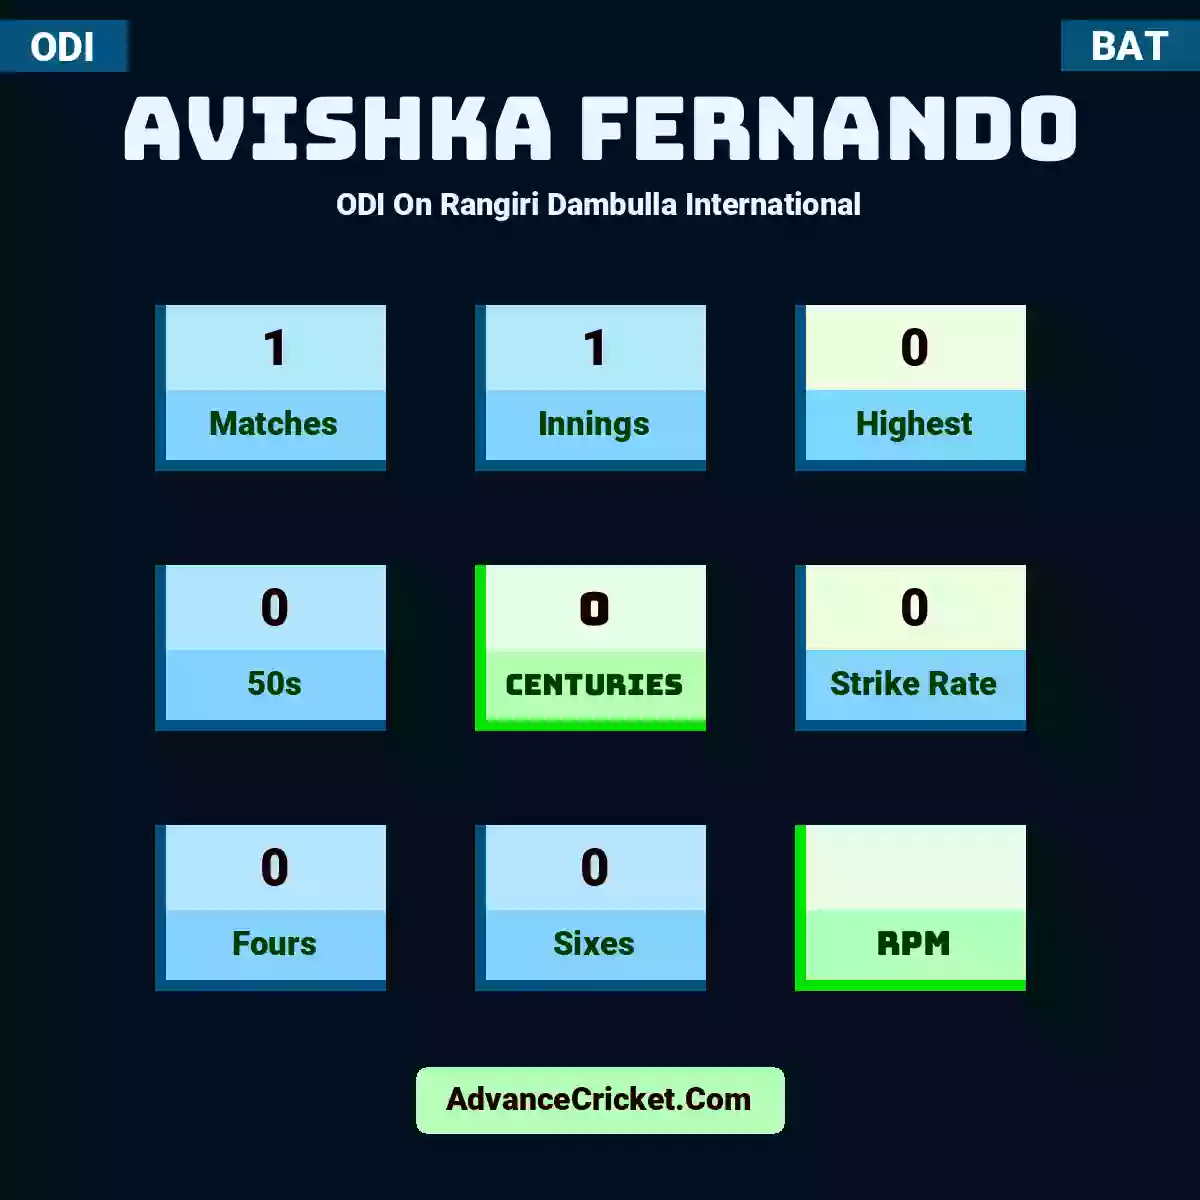 Avishka Fernando ODI  On Rangiri Dambulla International, Avishka Fernando played 1 matches, scored 0 runs as highest, 0 half-centuries, and 0 centuries, with a strike rate of 0. A.Fernando hit 0 fours and 0 sixes.